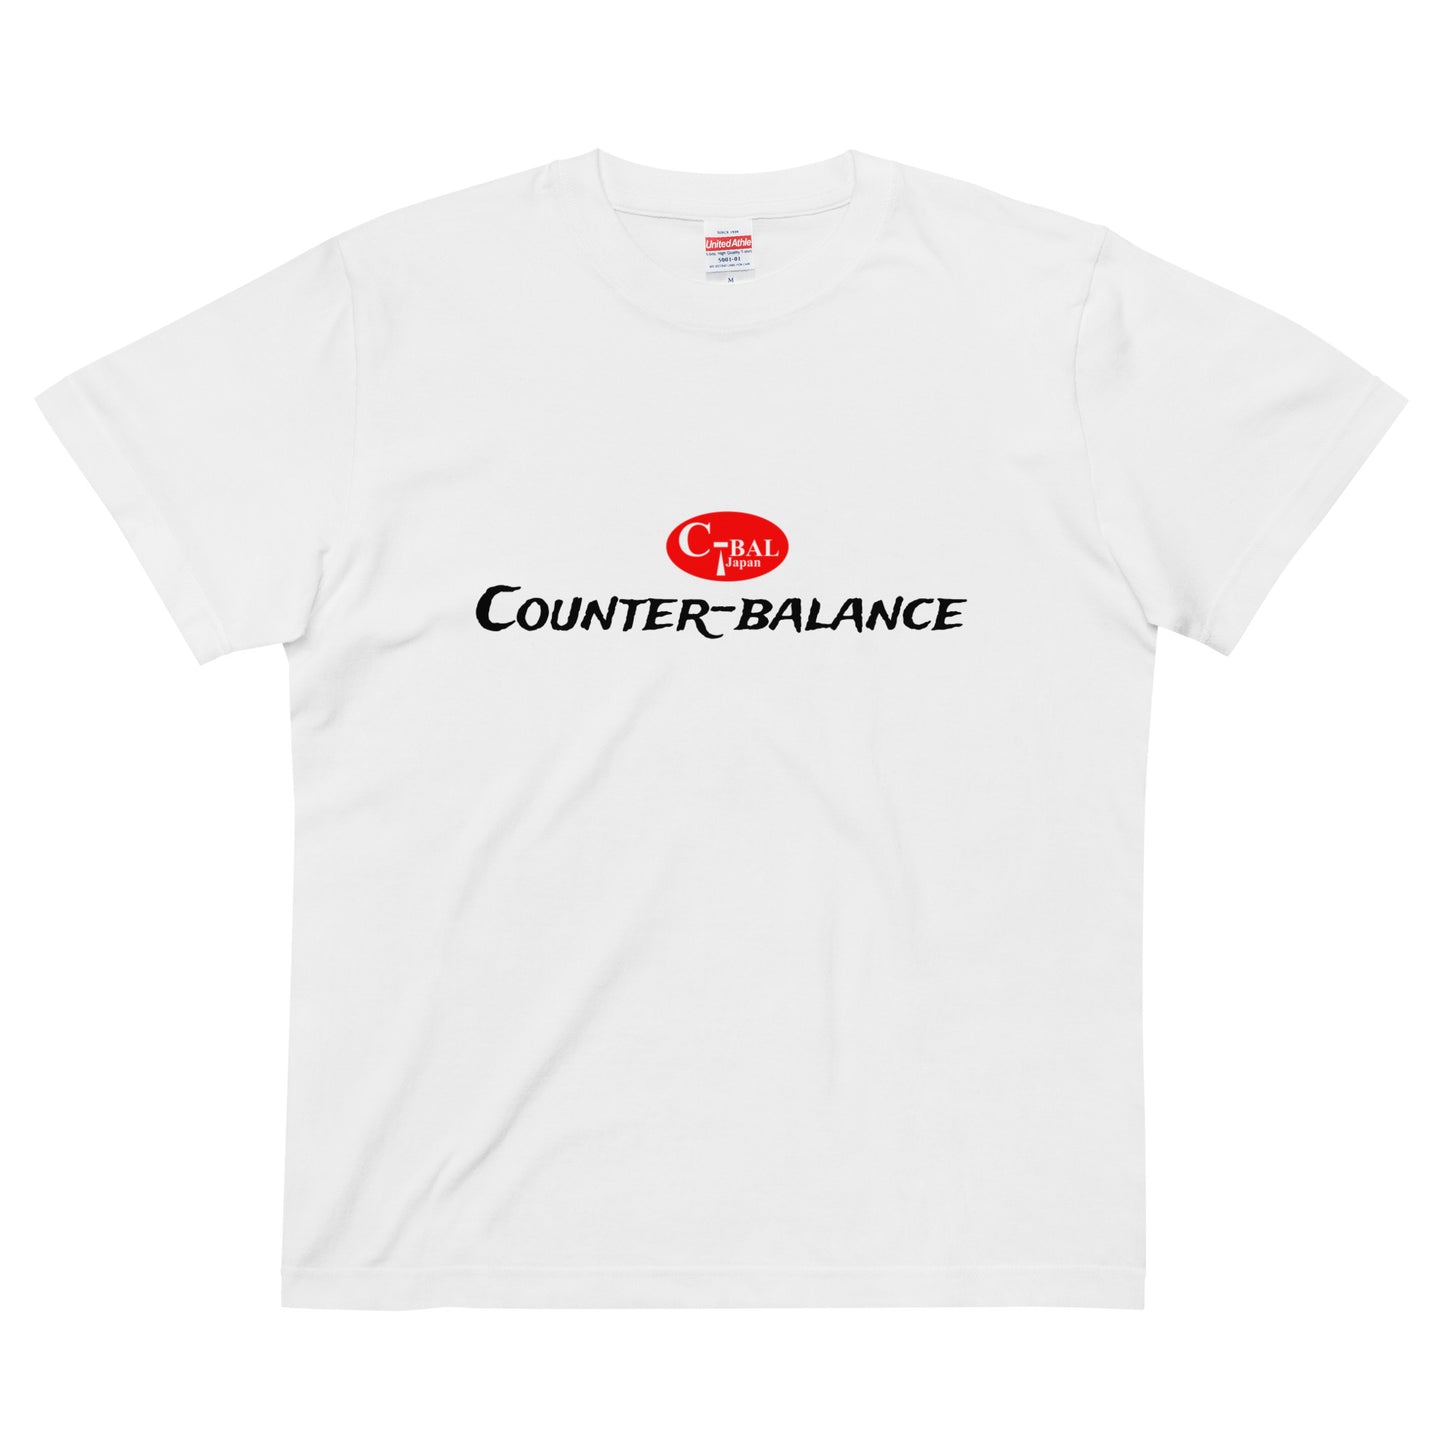 A002 - High Quality Cotton T-shirt (C-BAL : White / Red)